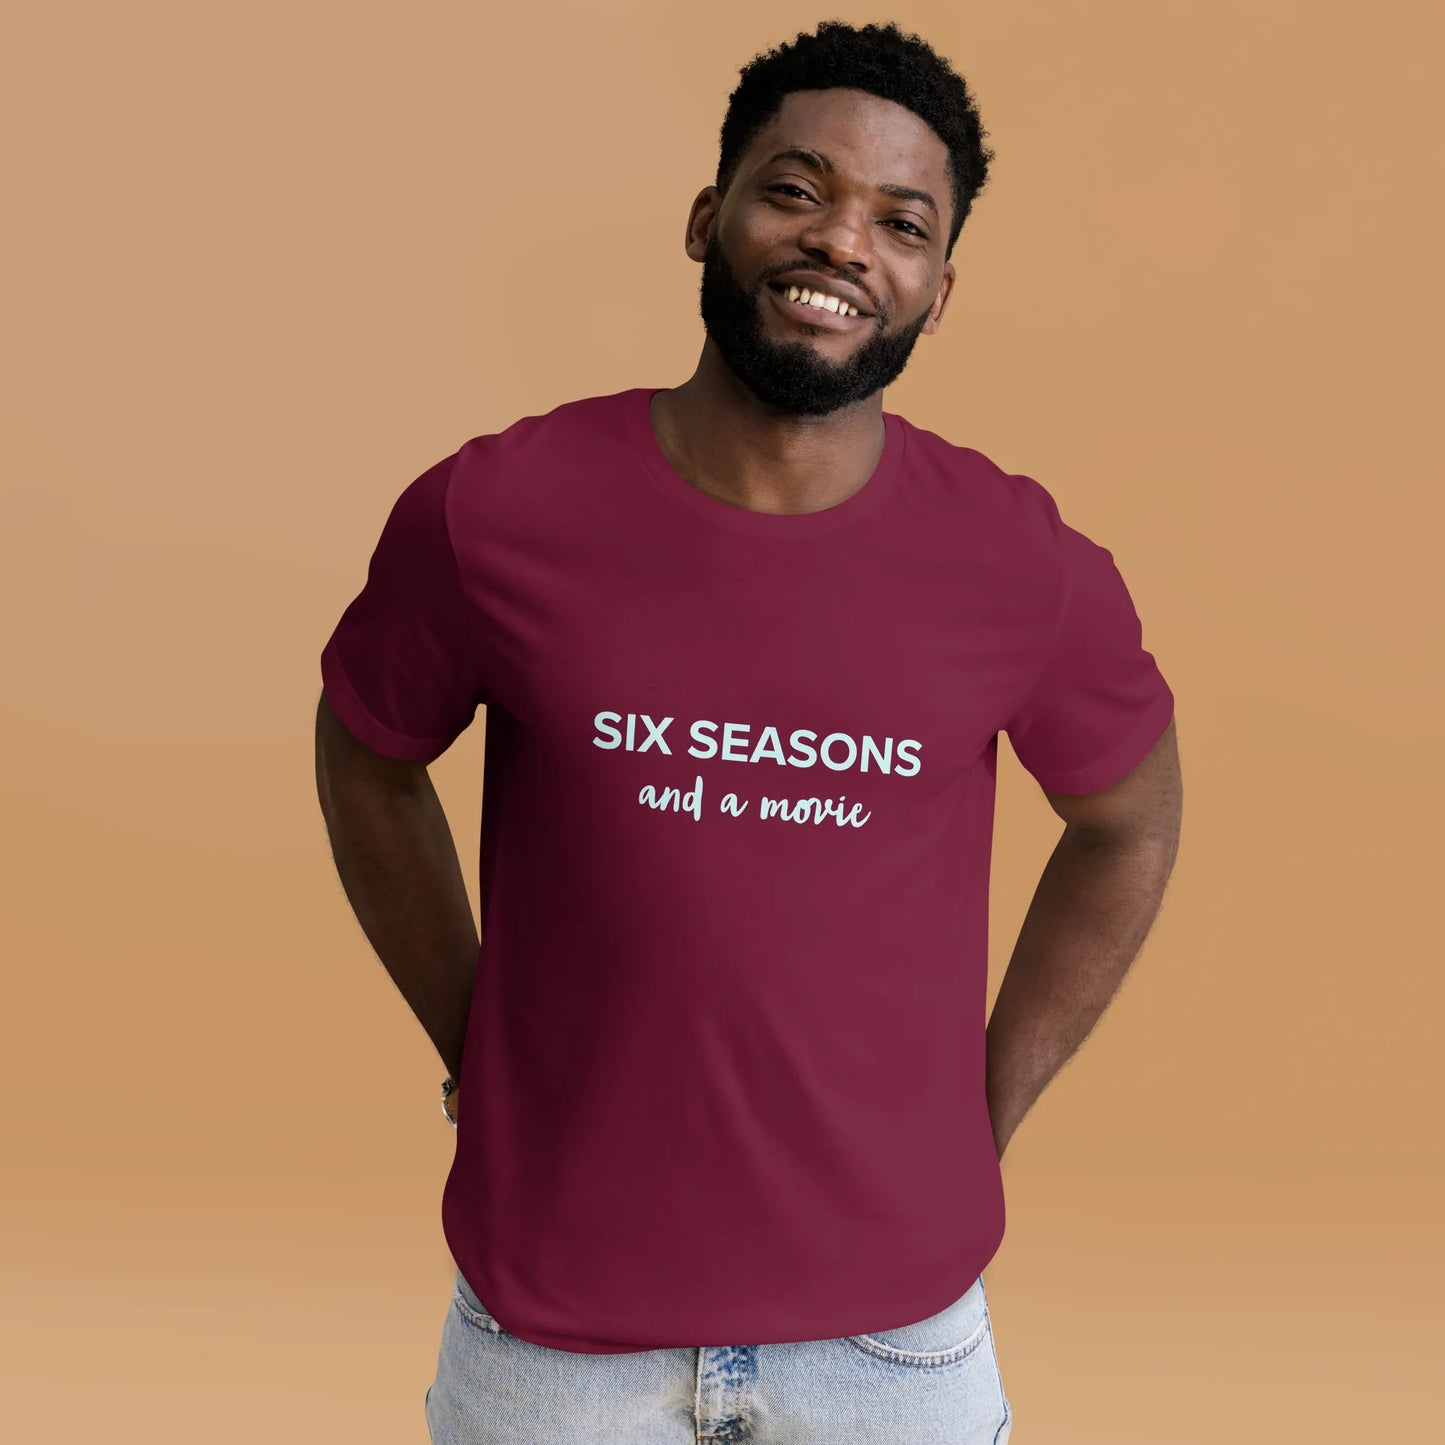 Six Seasons and a Movie Tee in Maroon on man